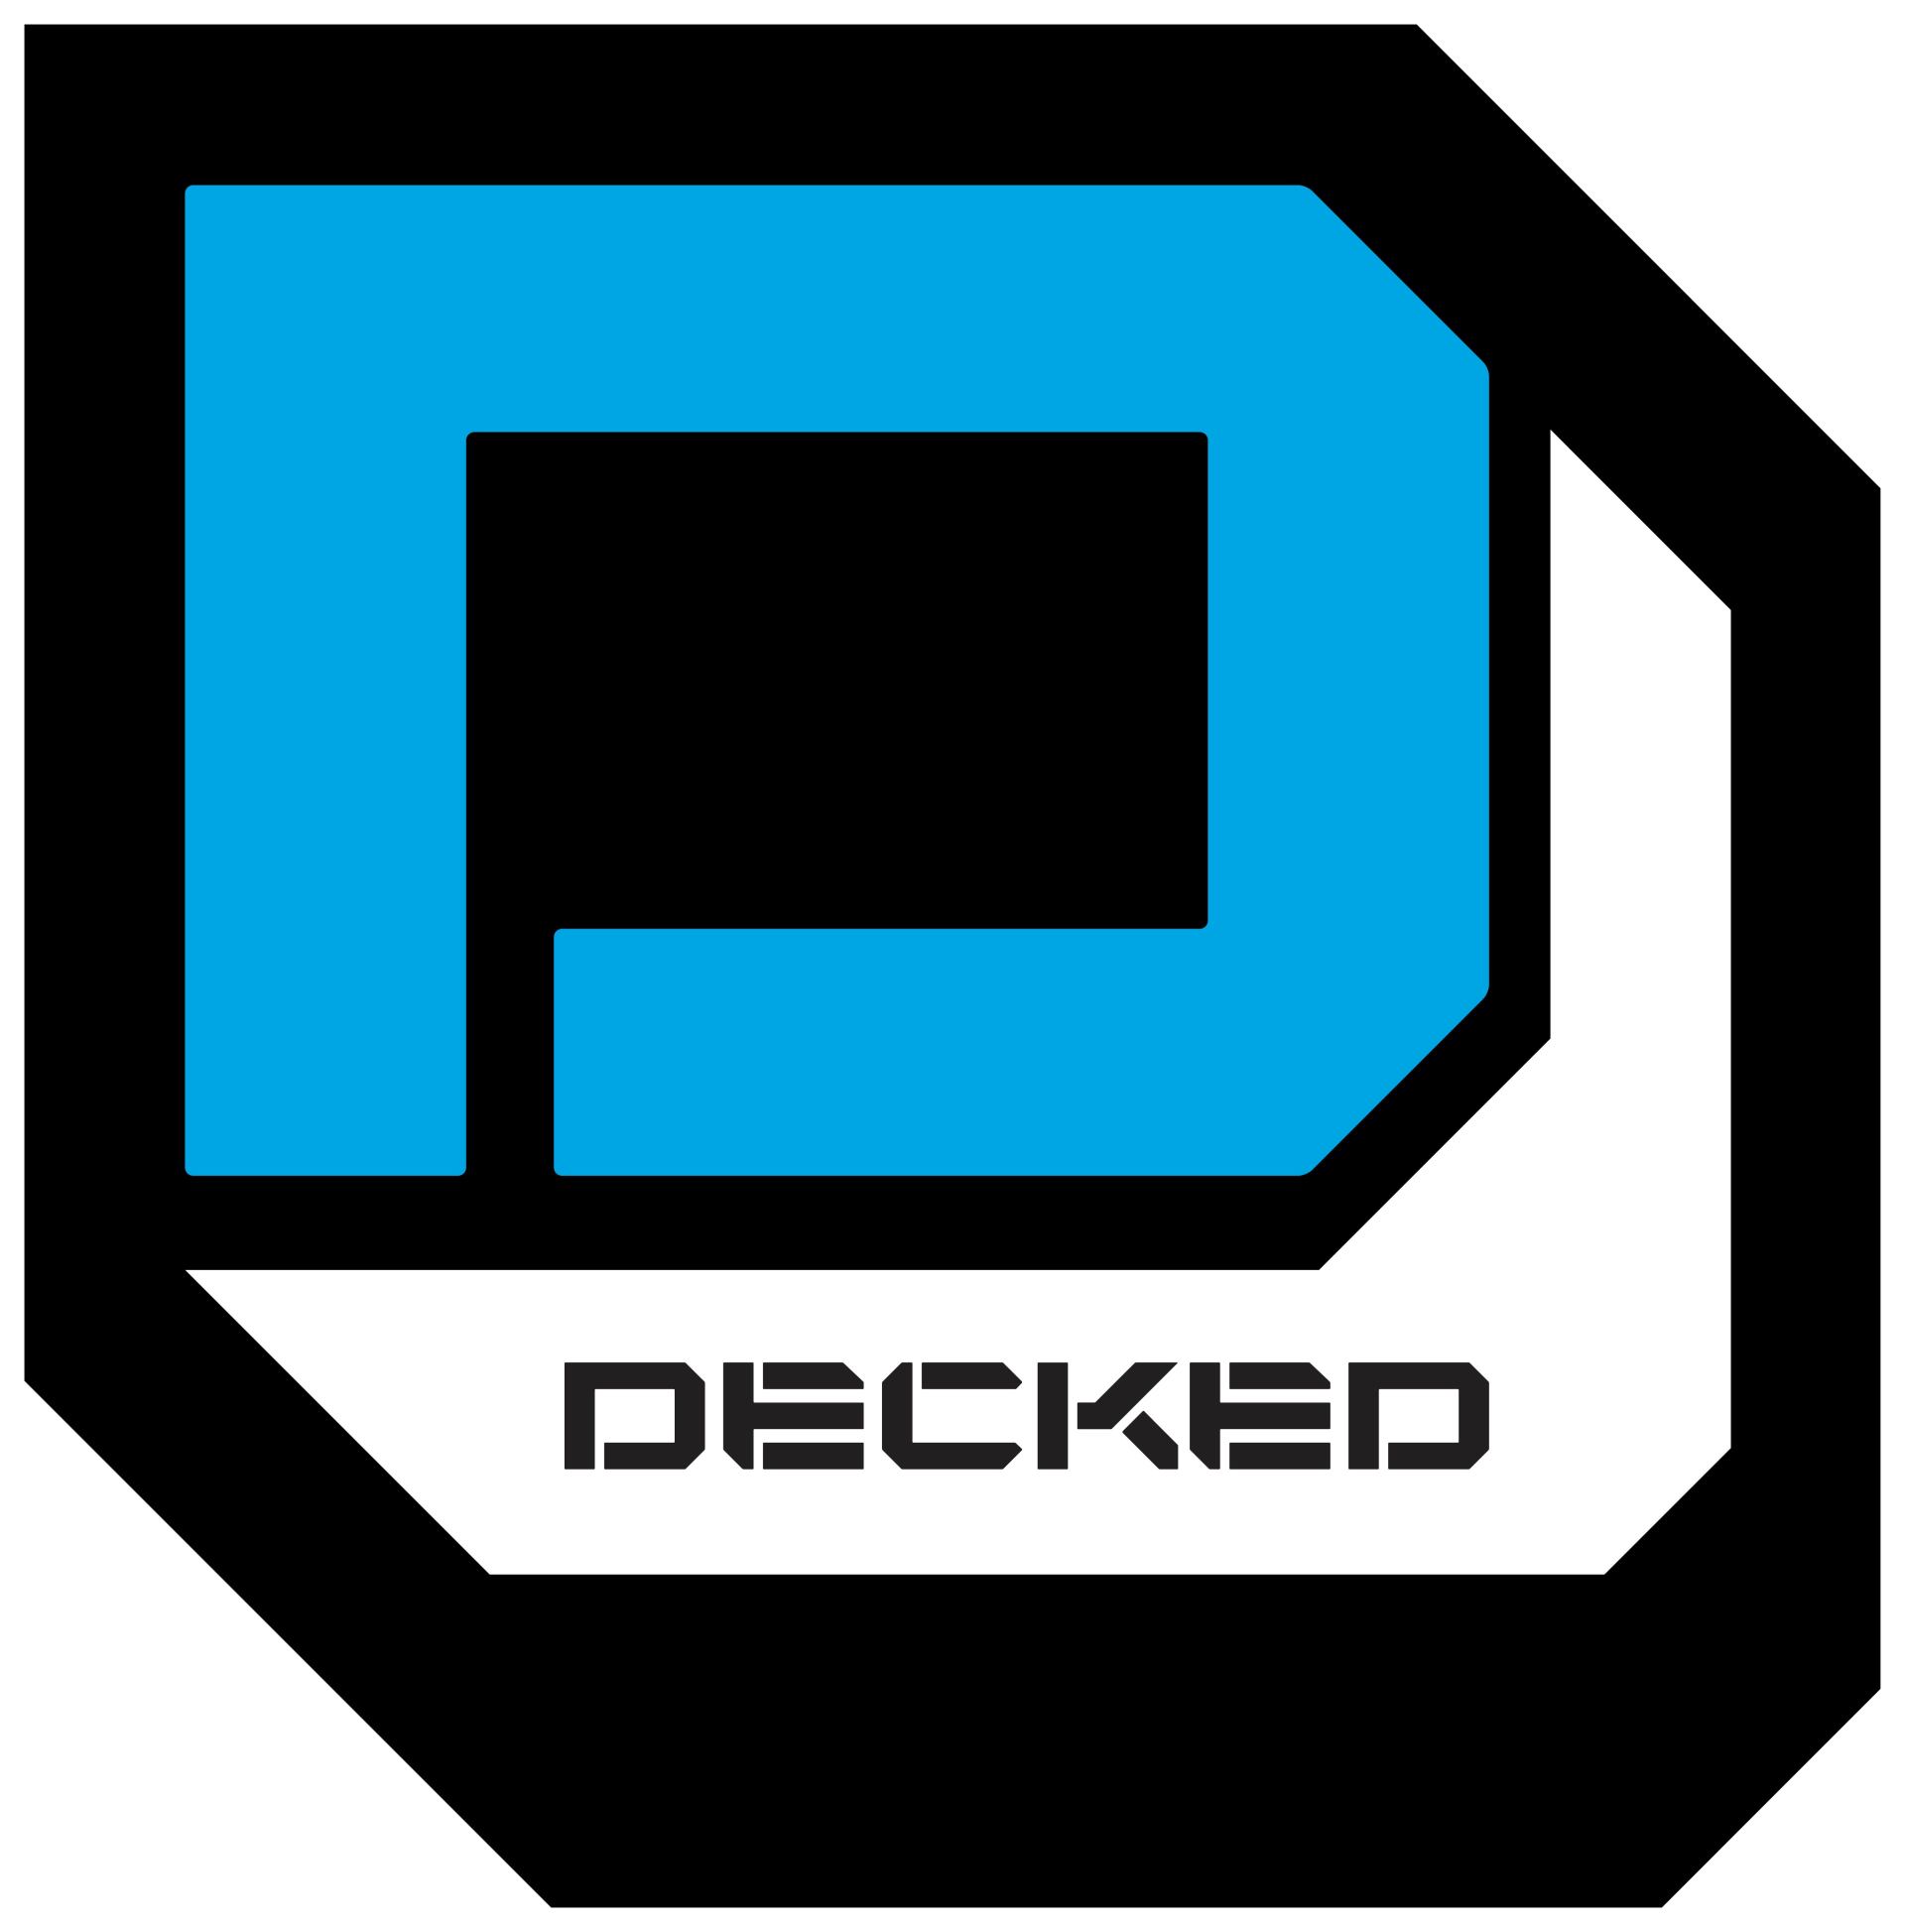 DECKED logo in Arkansas